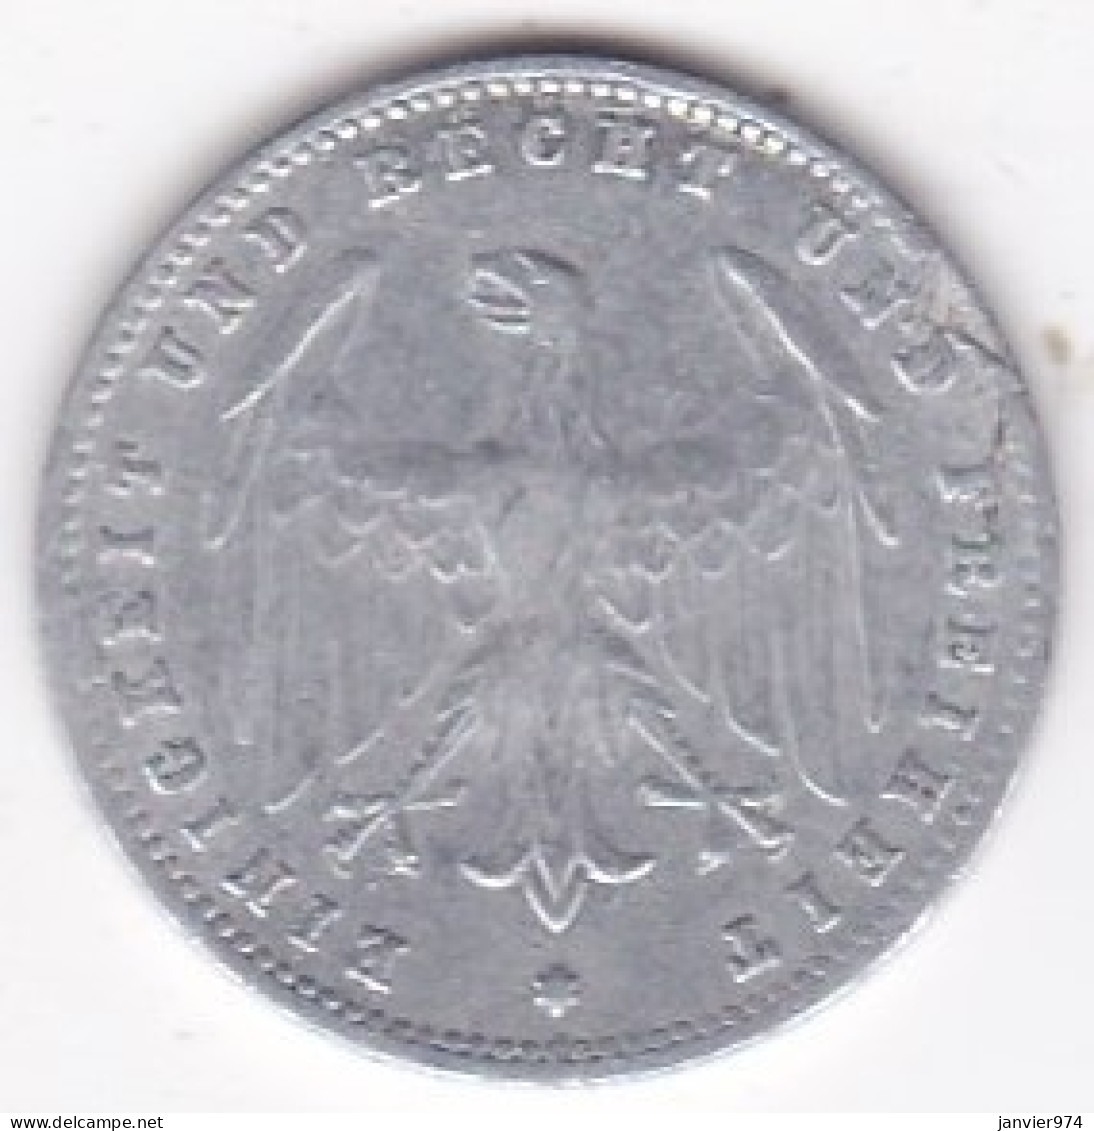 République De Weimar 200 Mark 1923 A Berlin , En Aluminium - 200 & 500 Mark